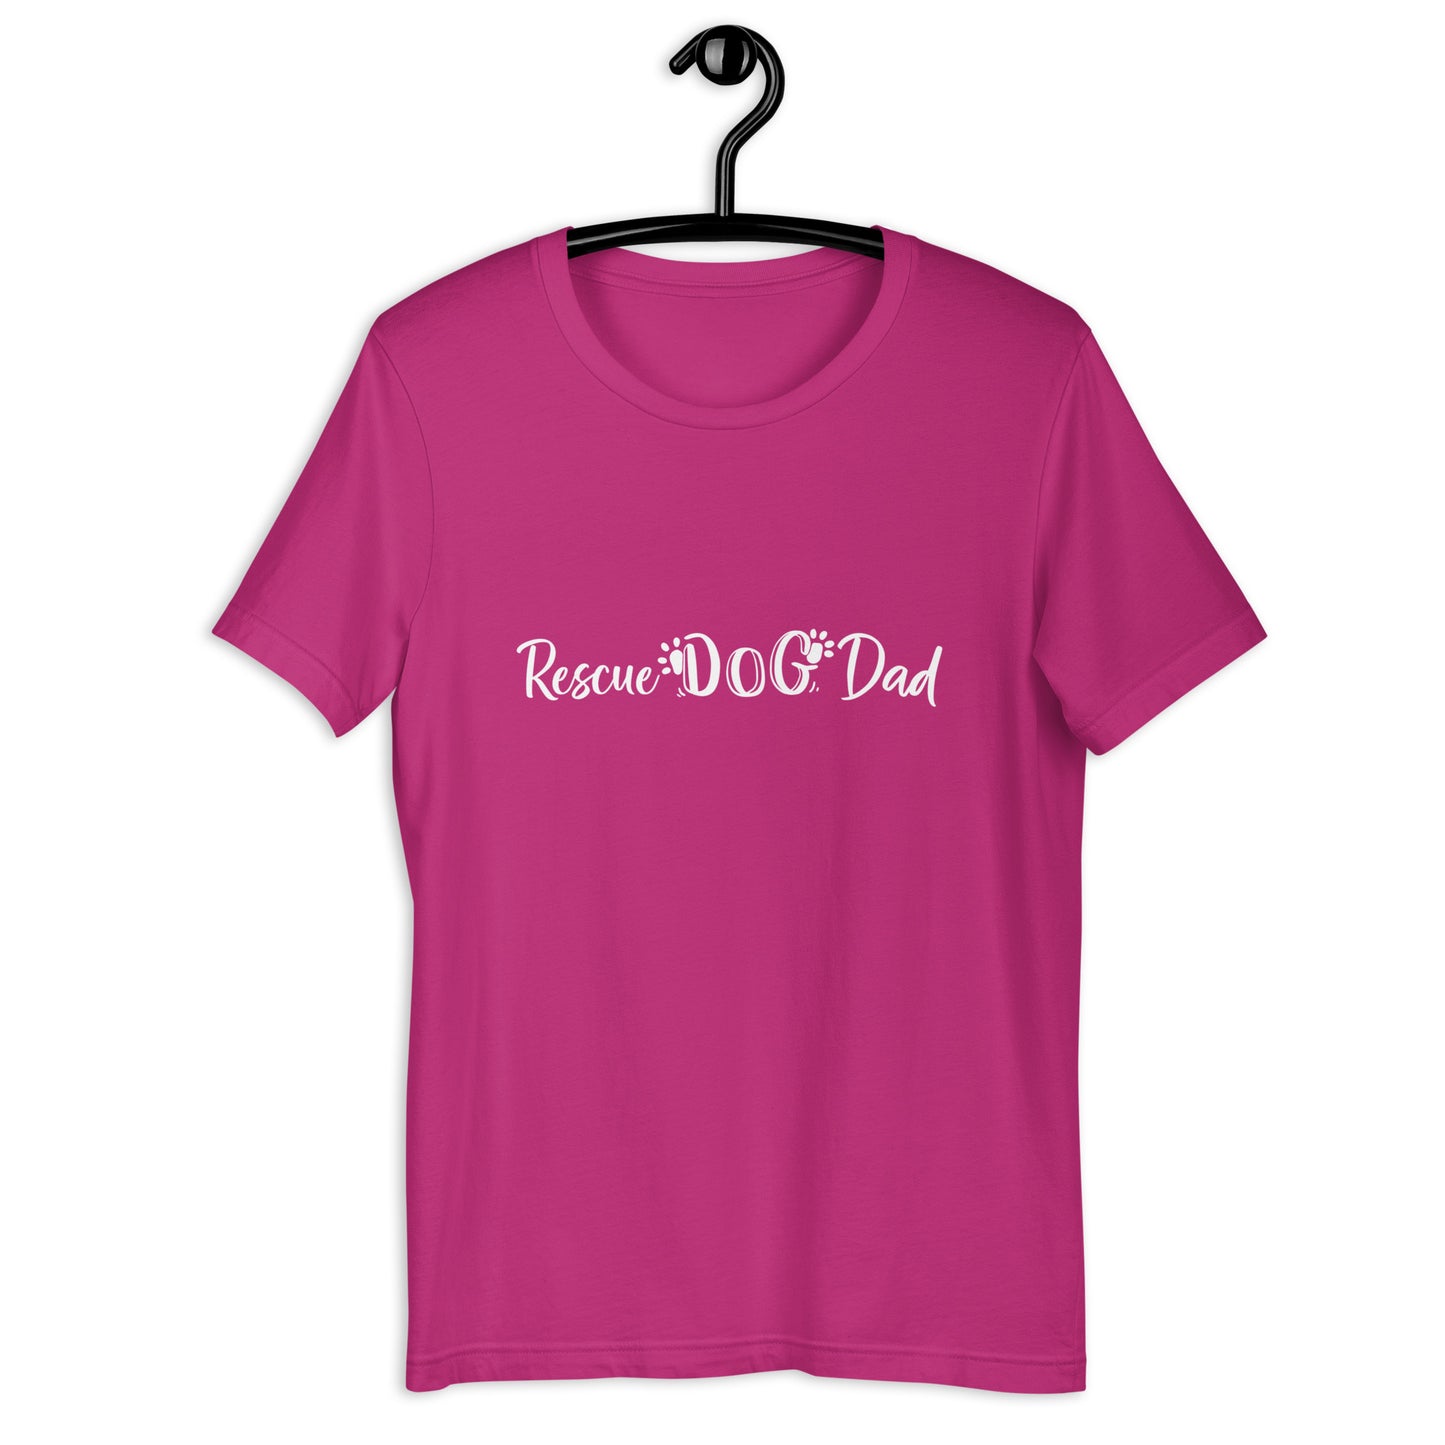 RESCUE DOG DAD - Unisex t-shirt